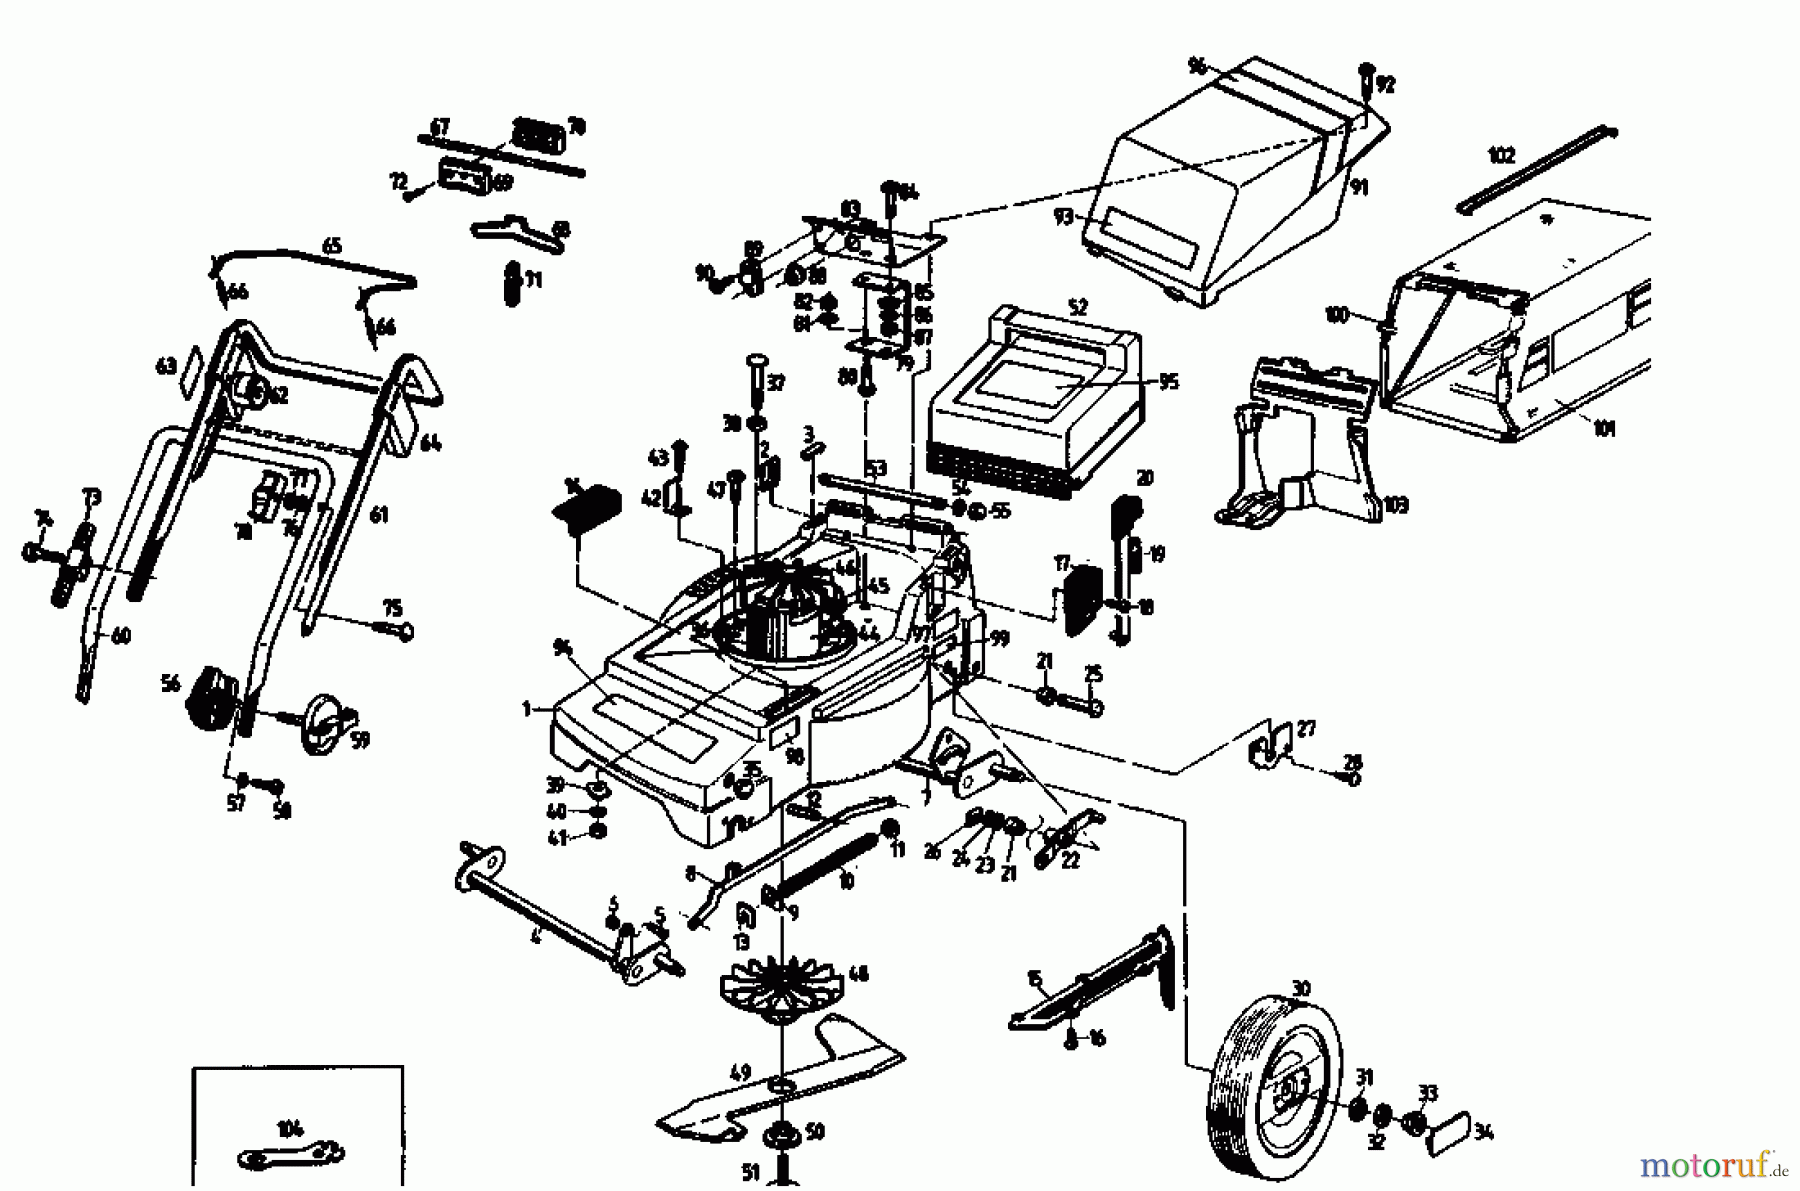  Gutbrod Electric mower MHE 400 04019.01  (1992) Basic machine